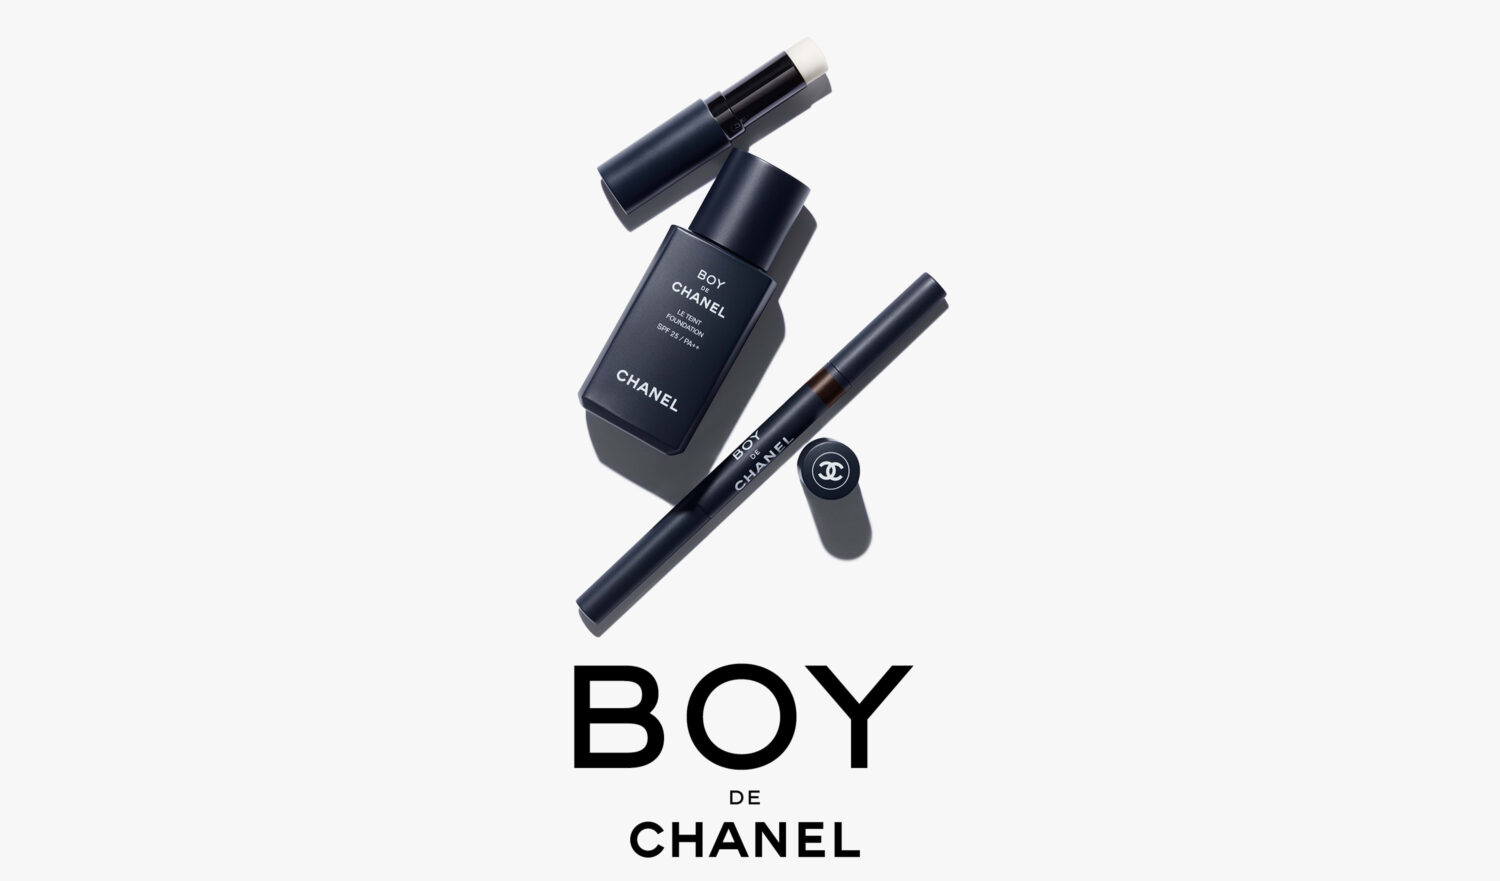 Chanel Announced Its New Boy de Chanel Makeup Line